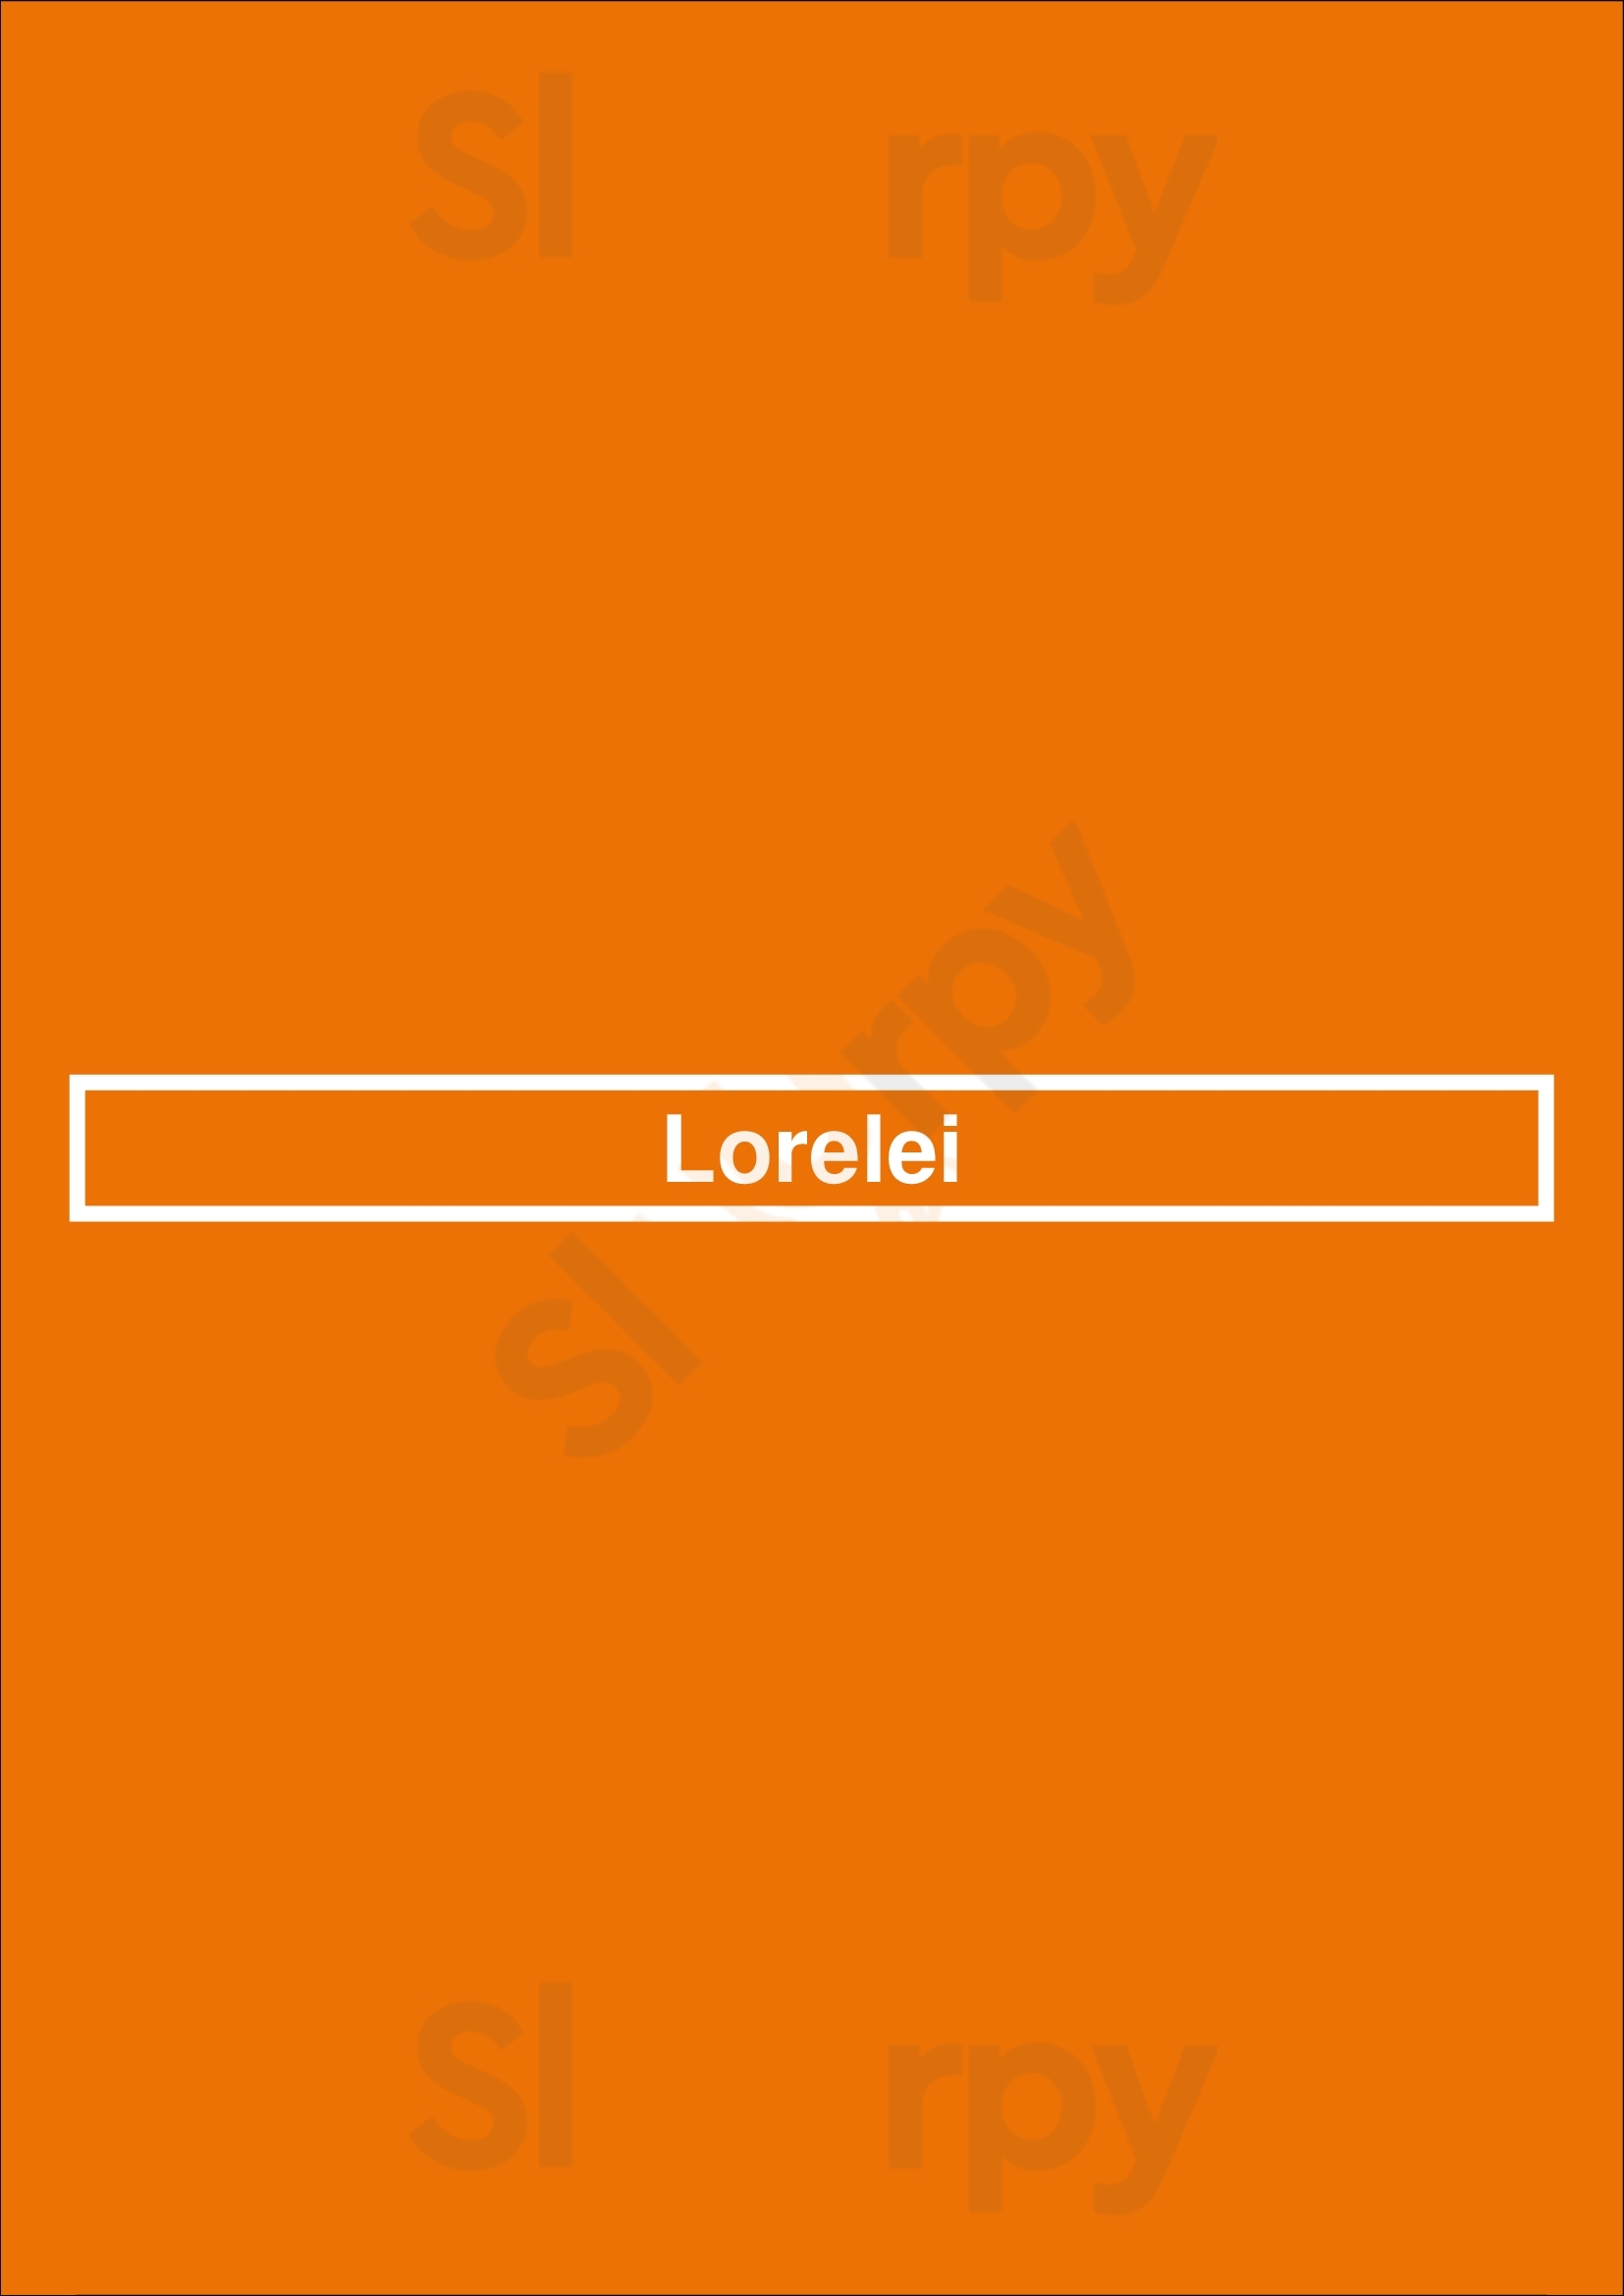 Lorelei Den Haag Menu - 1